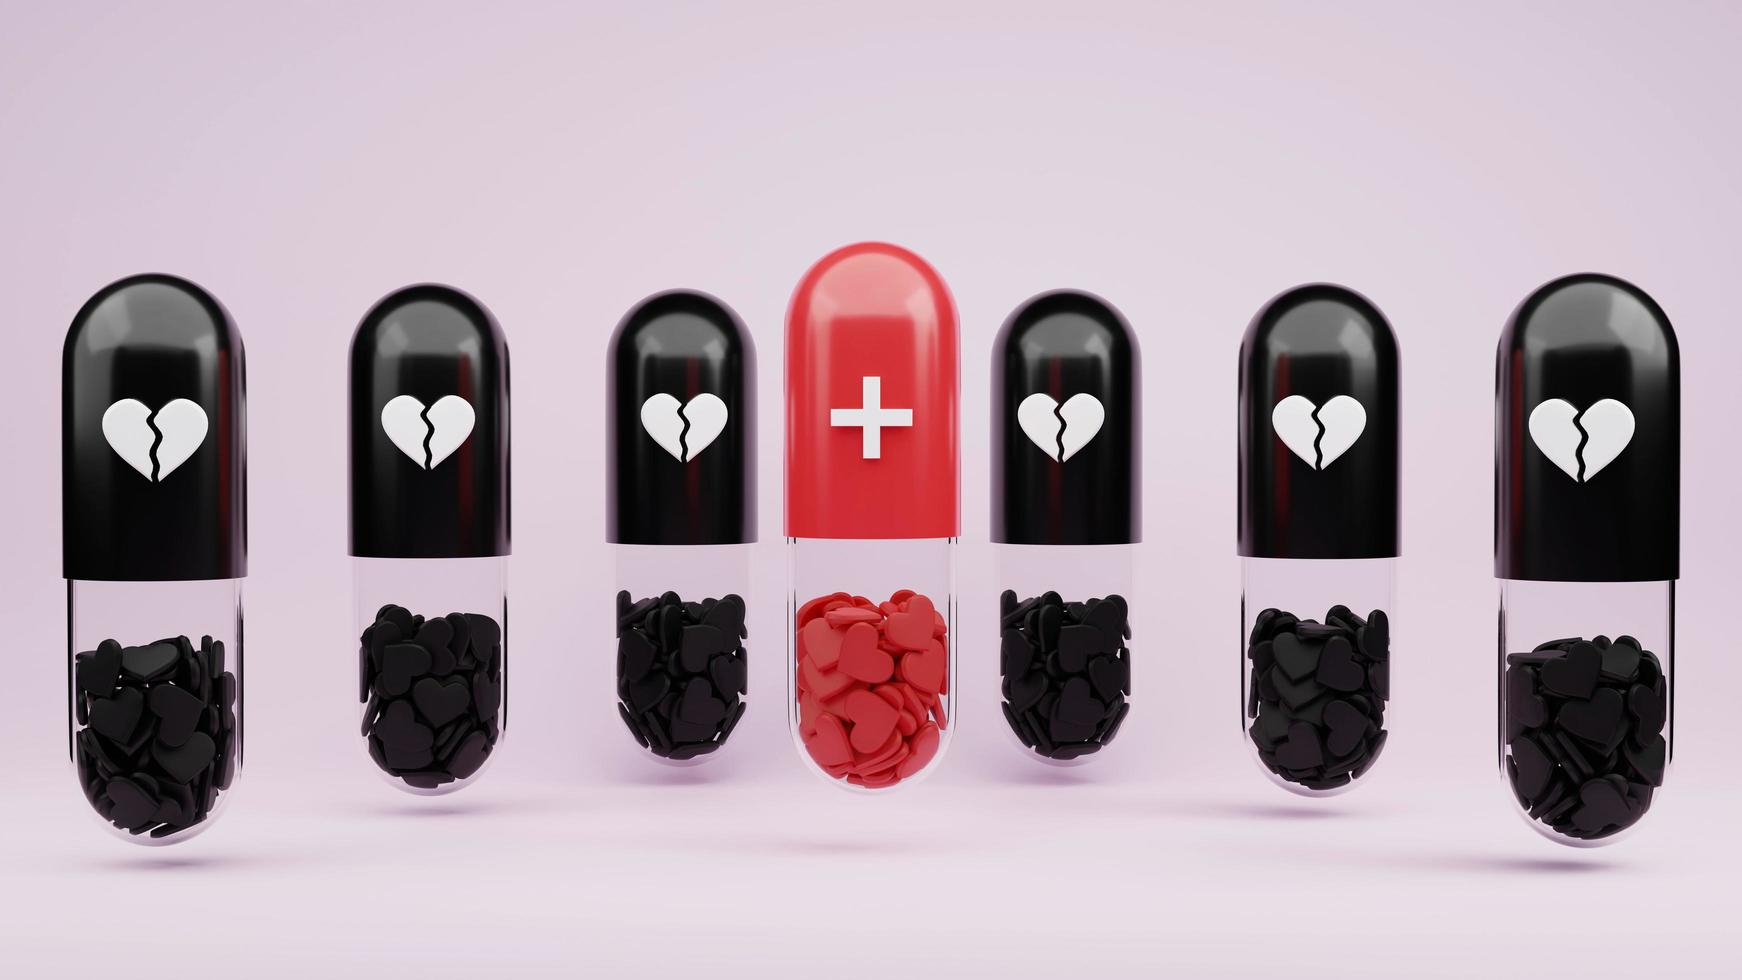 Capsule medicine for healing broken heart 3D render illustration photo